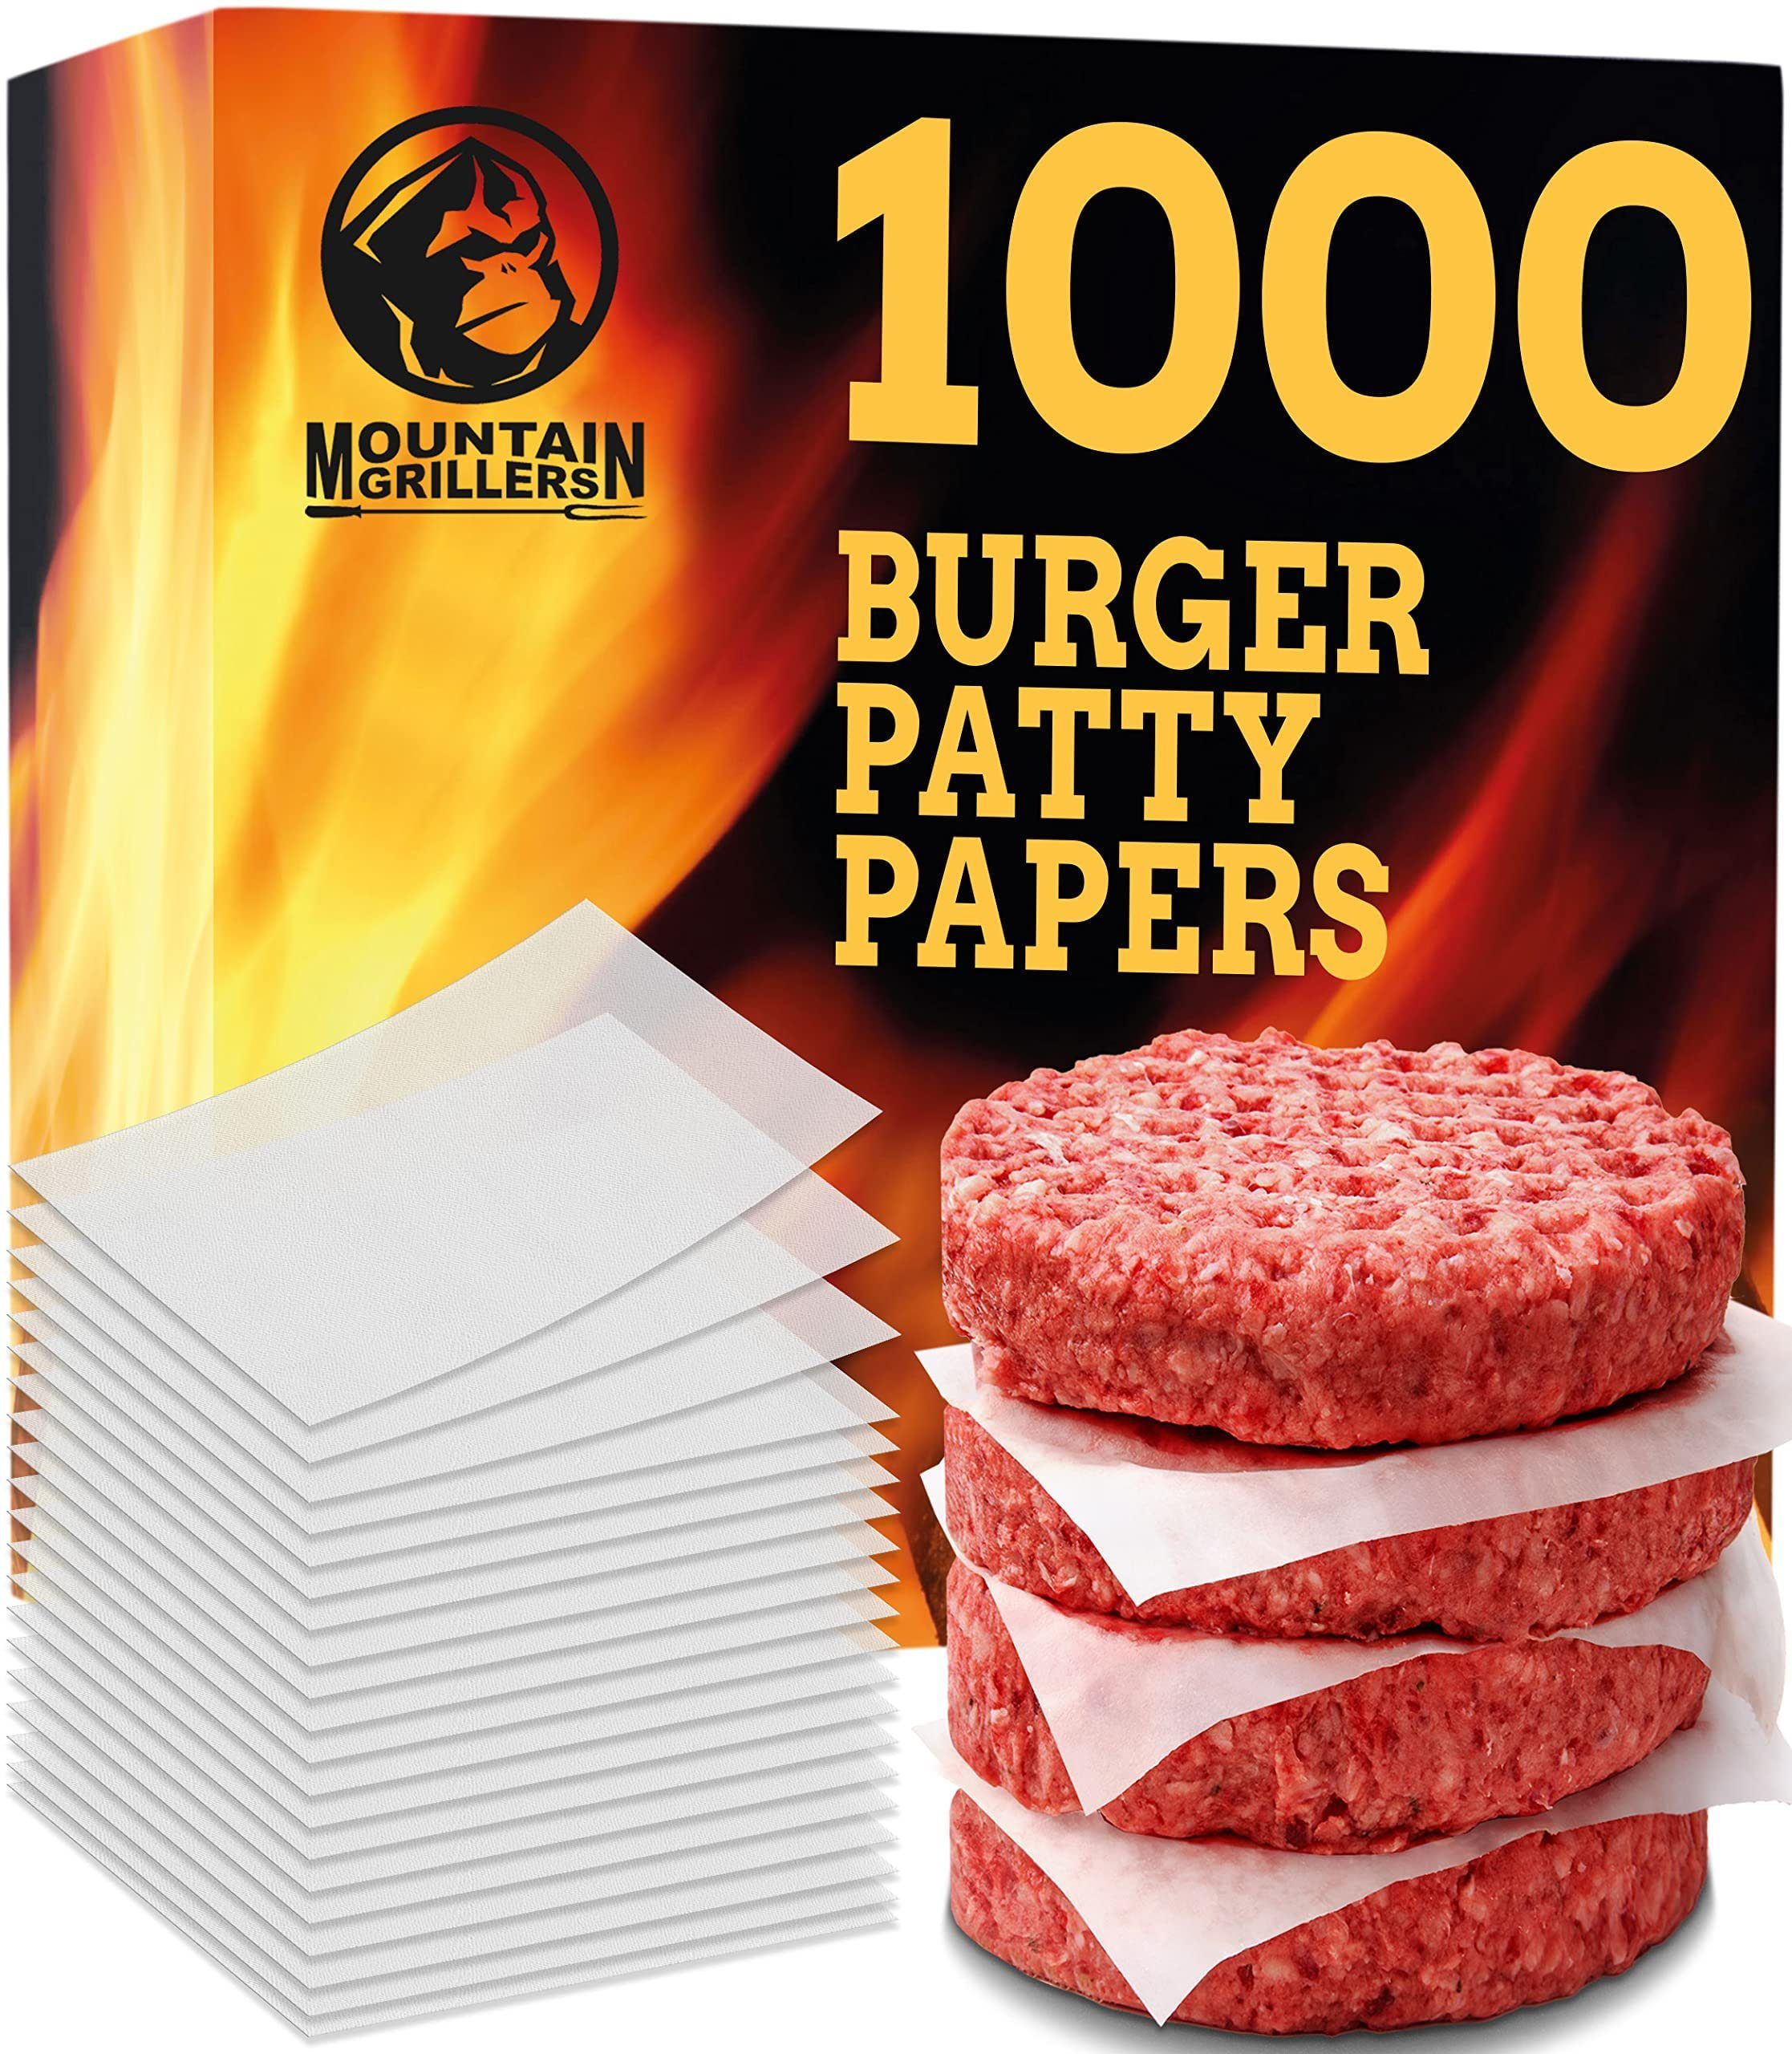 115 Mountain Quadratische Trennpapier Blatt Burgerpapier, Form 1000 Mit Paper Burgerpresse Cm, Patty Papier Wachspapier Grillers - Antihaftes